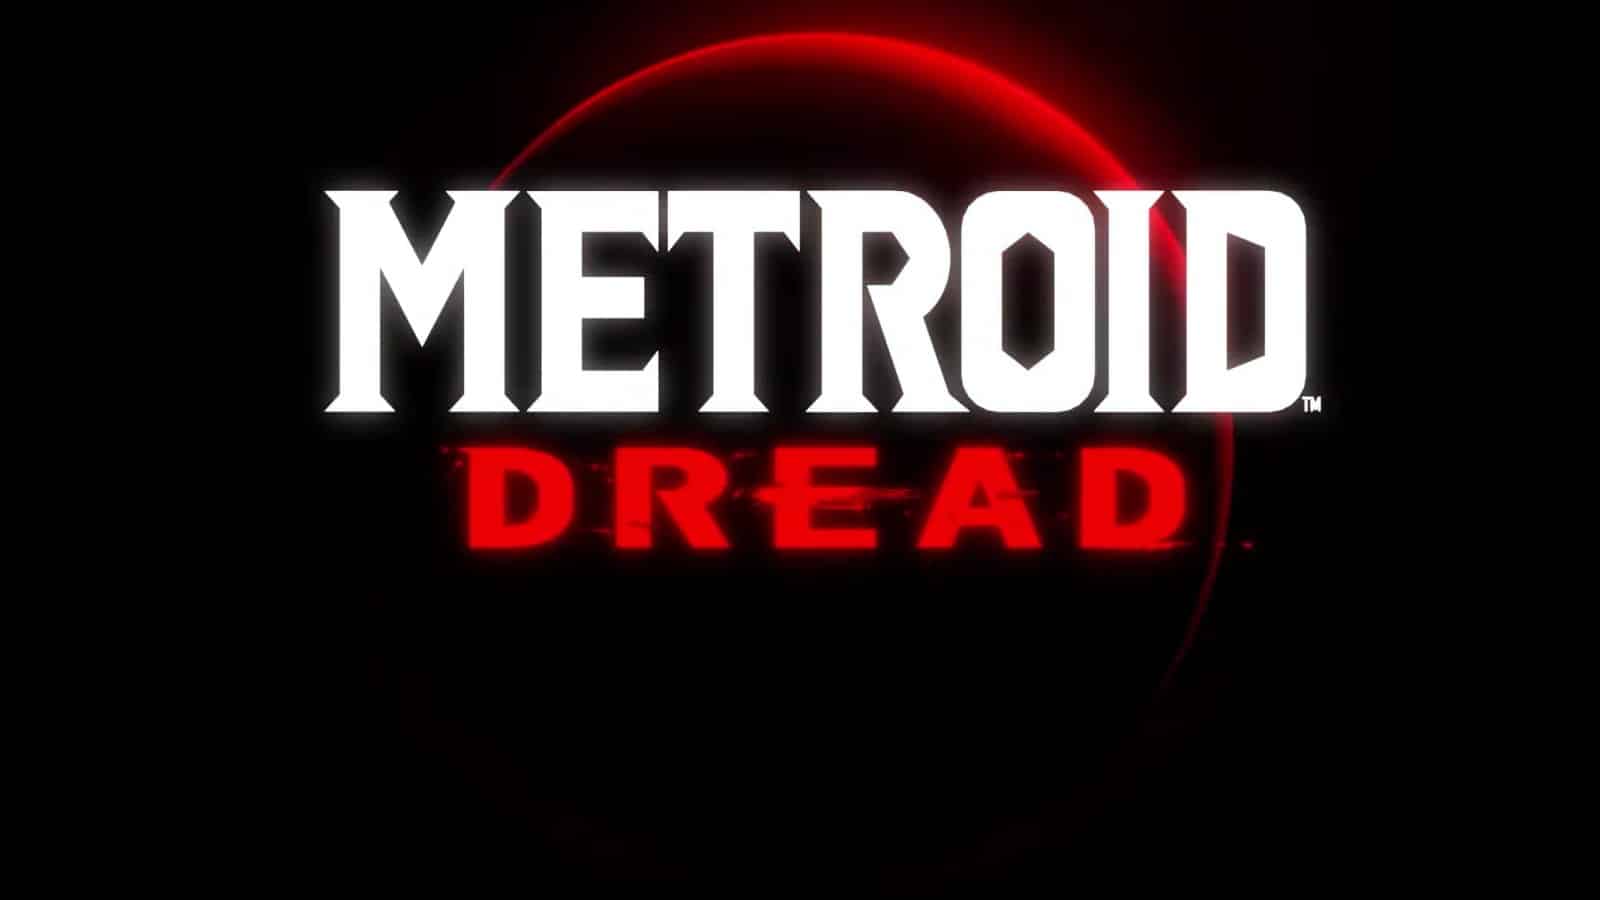 Metroid Dread updates